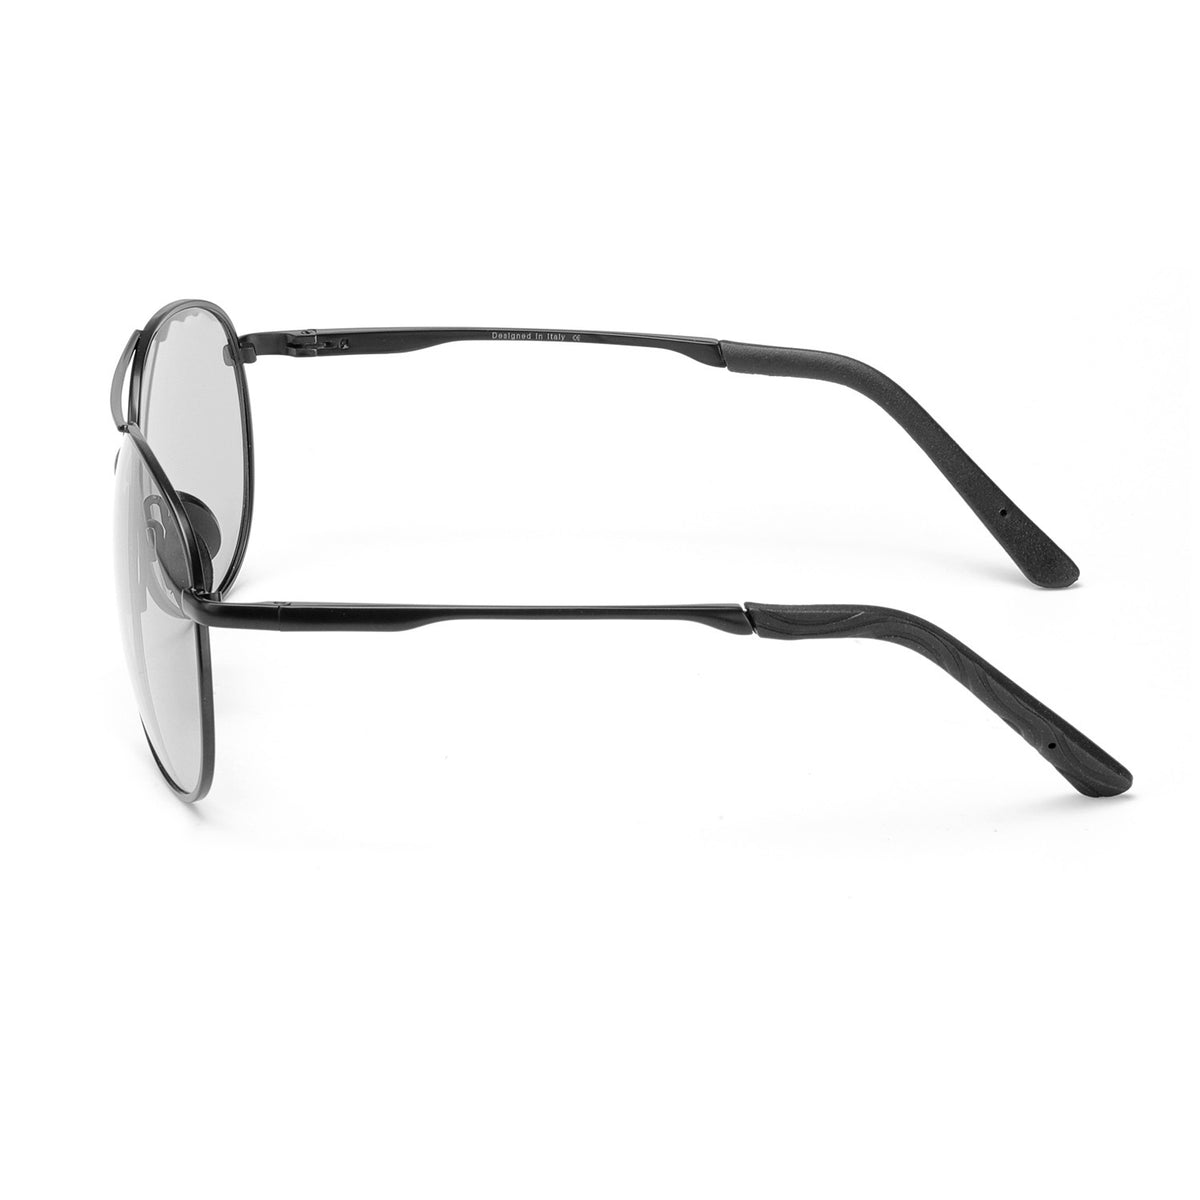 TJUTR Pilot Sunglasses with Metal Frame for Men